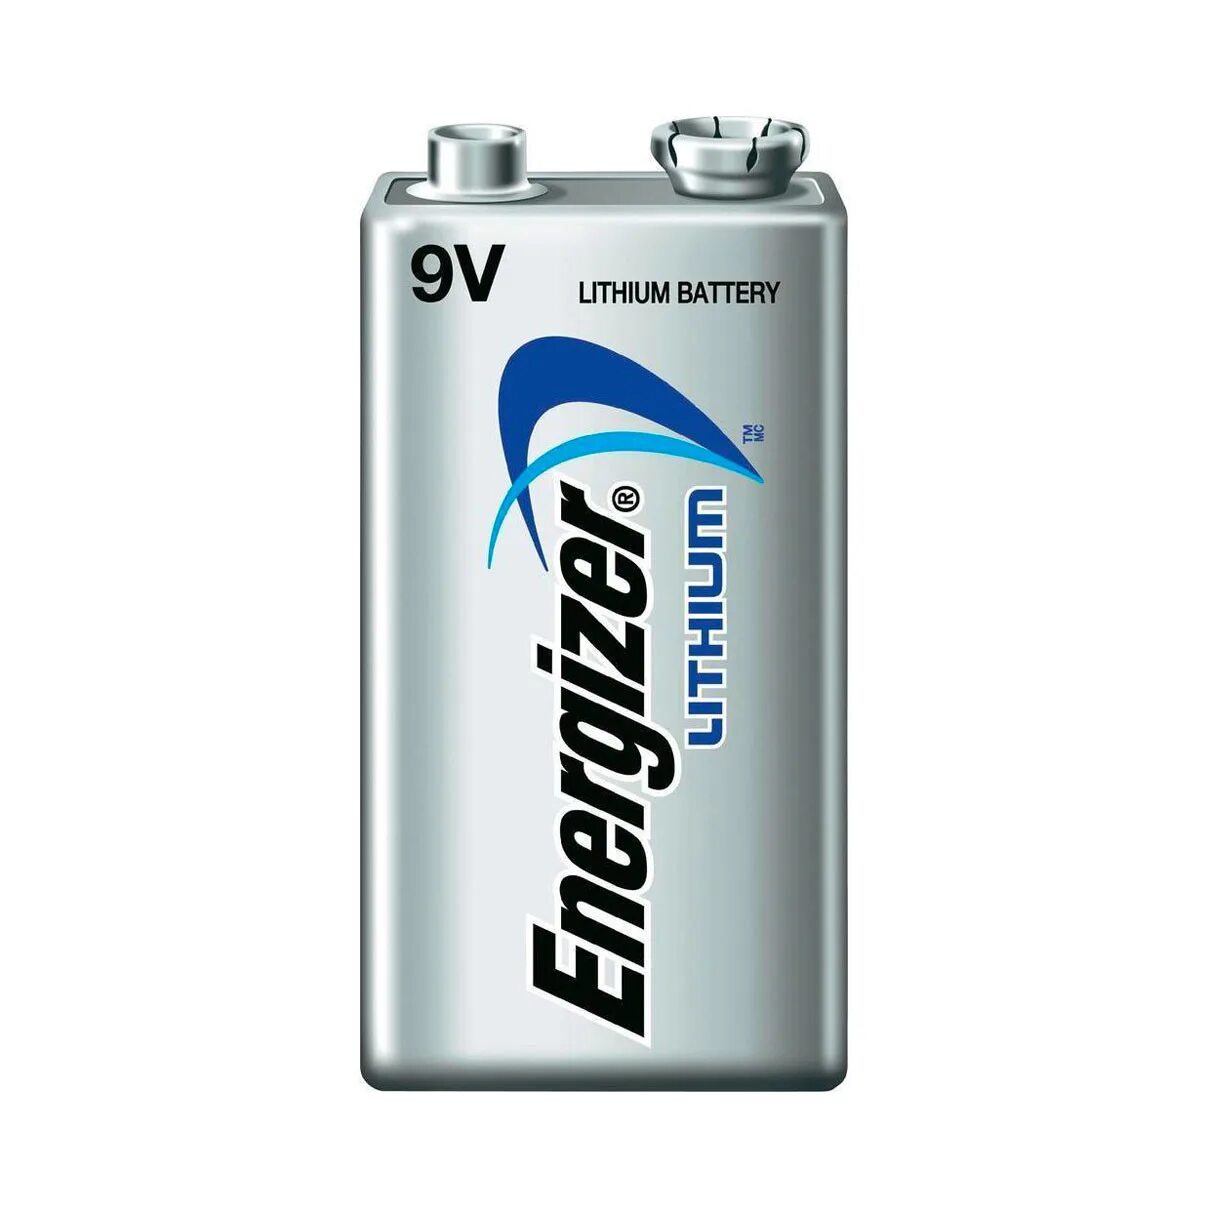 Battery 5. Батарейка 9v Energizer 522 6lr61. Батарейки энерджайзер 9v. Lithium 9v Battery. Батарейка 0415а Energizer Lithium Battery.